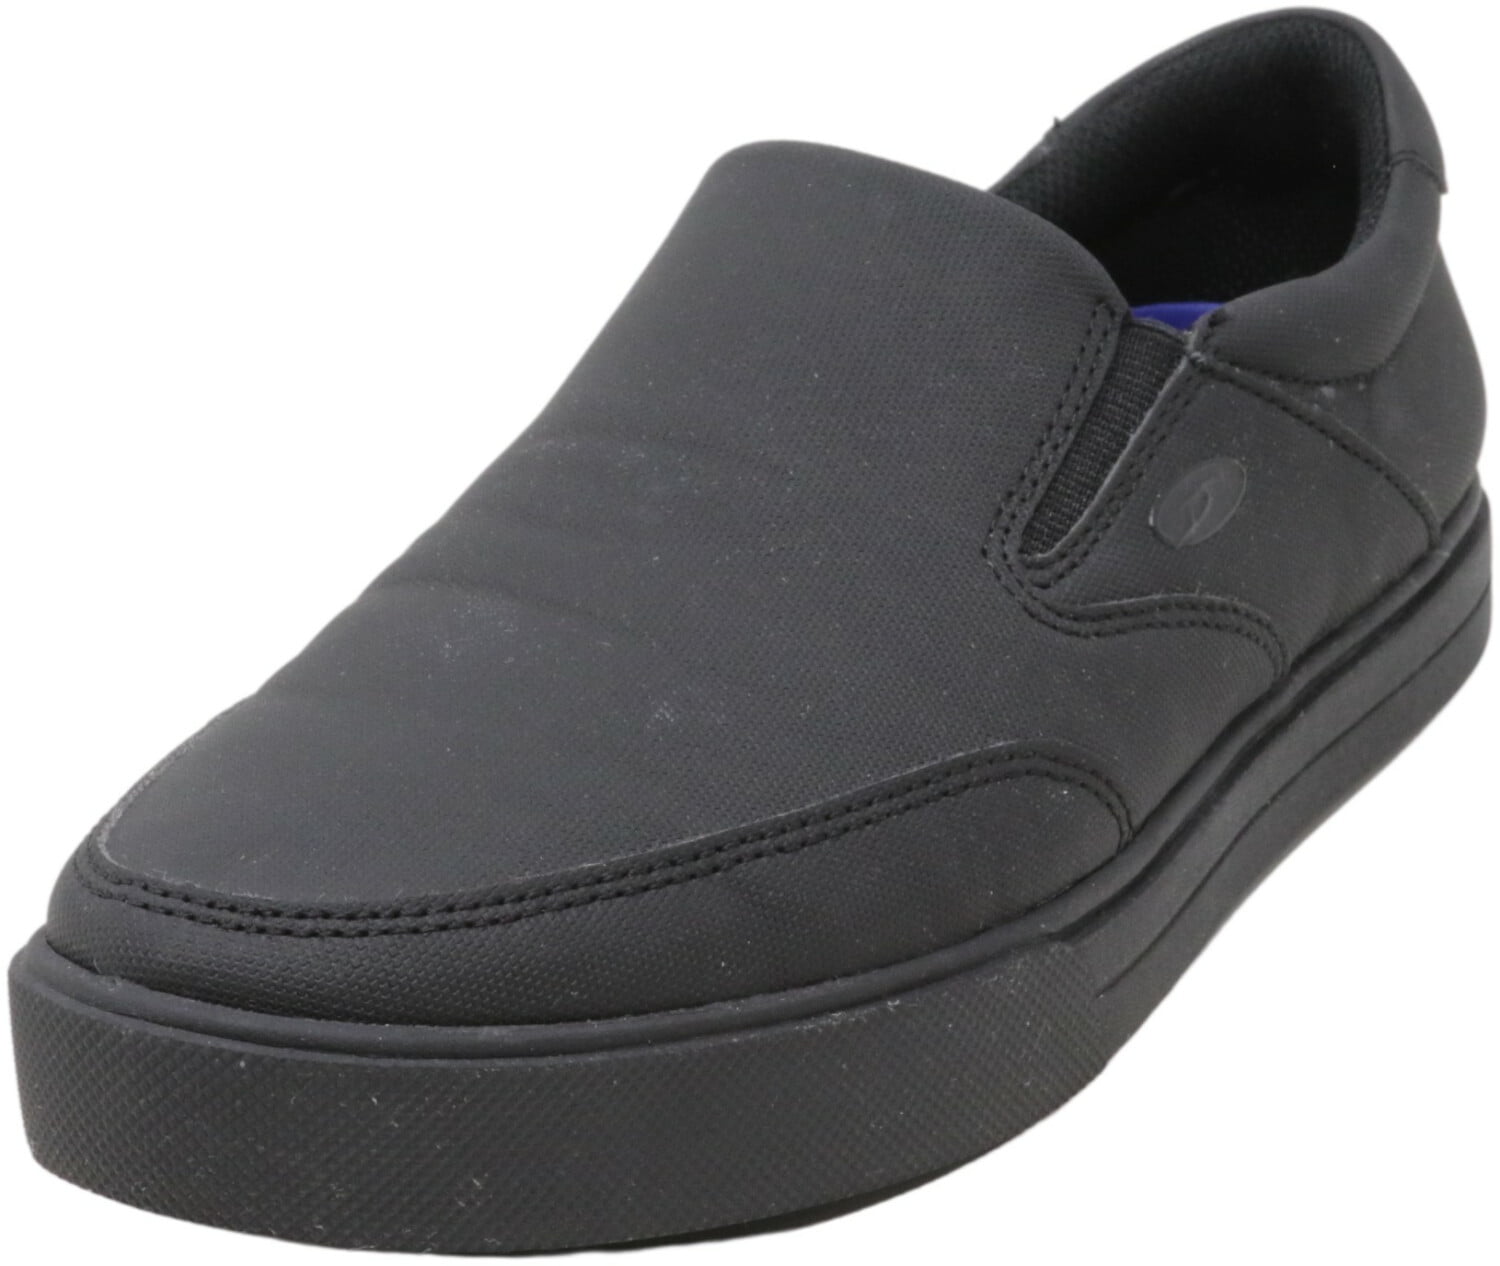 Dr. Scholls Women's Vital Black Ankle-High Slip-On Shoes - 8M | Walmart ...